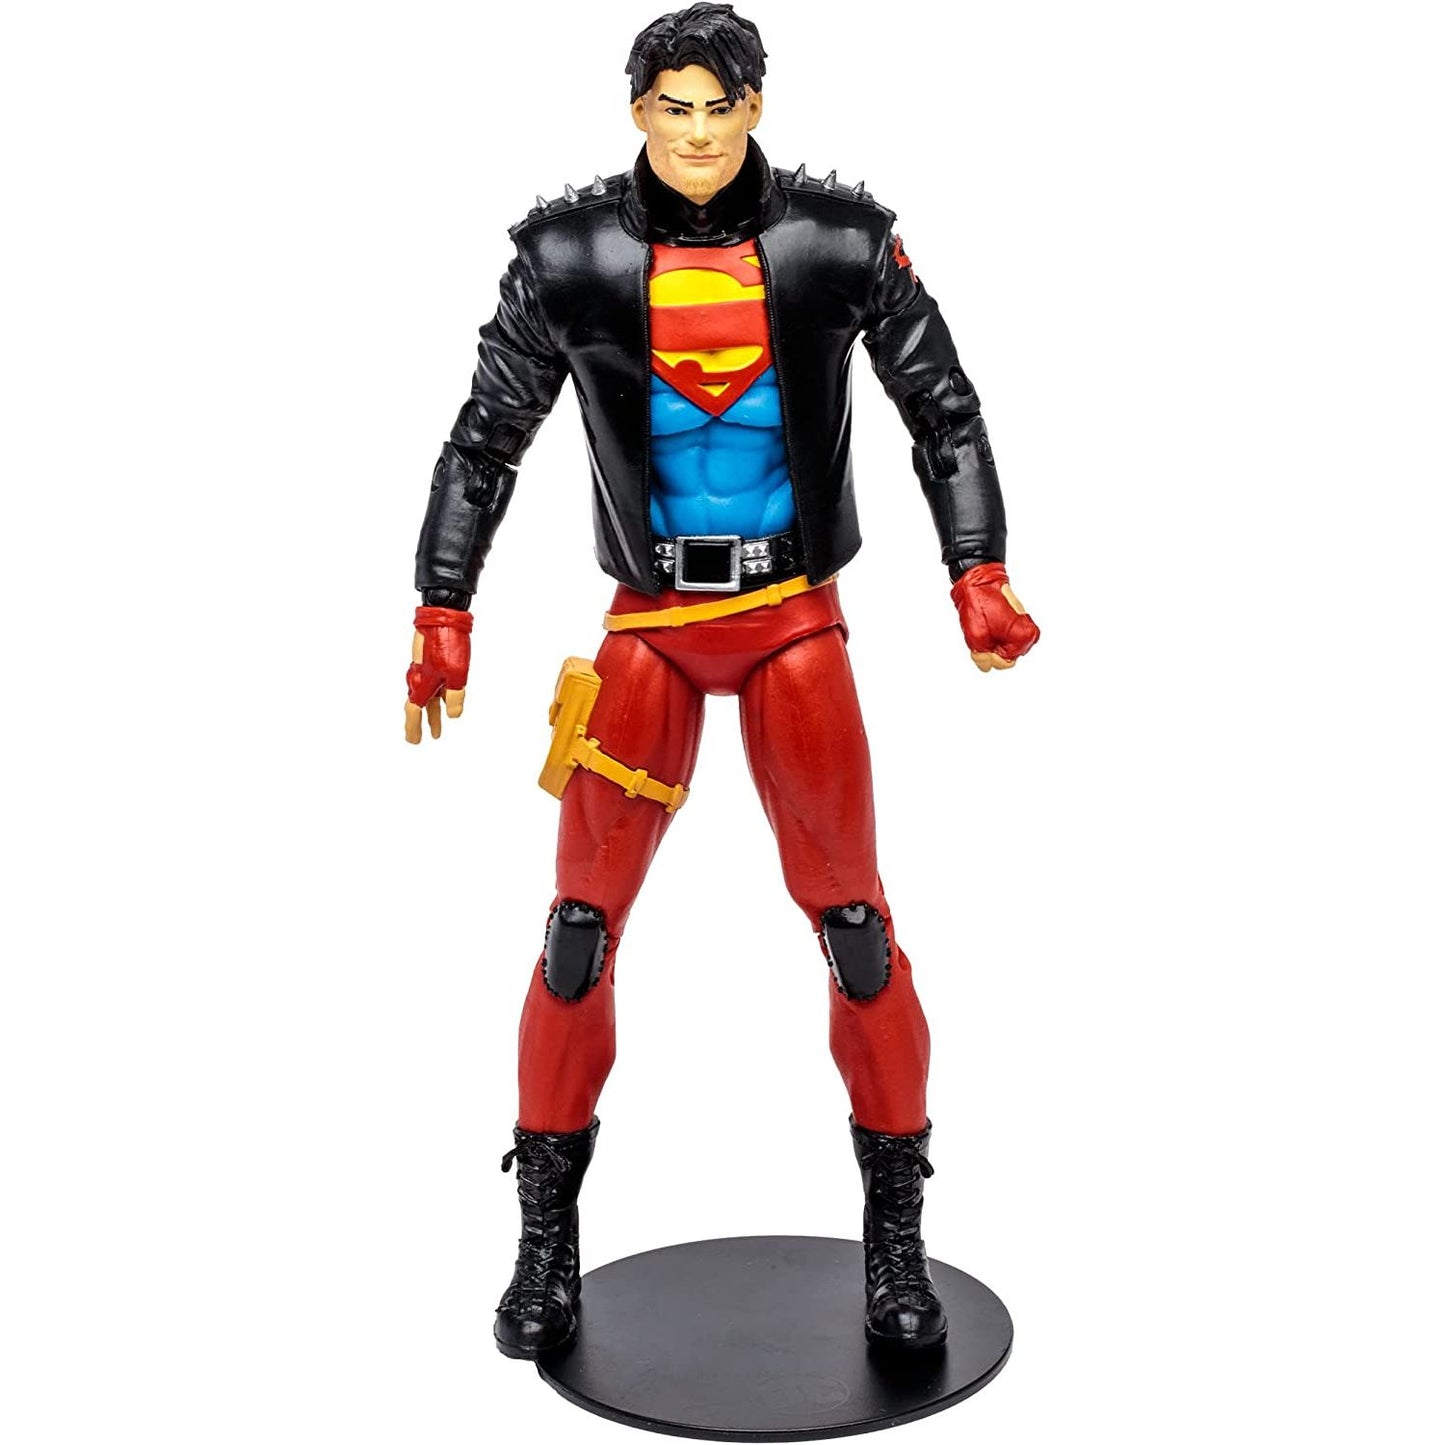 DC Multiverse Kon-El Superboy 7-Inch Scale Action Figure